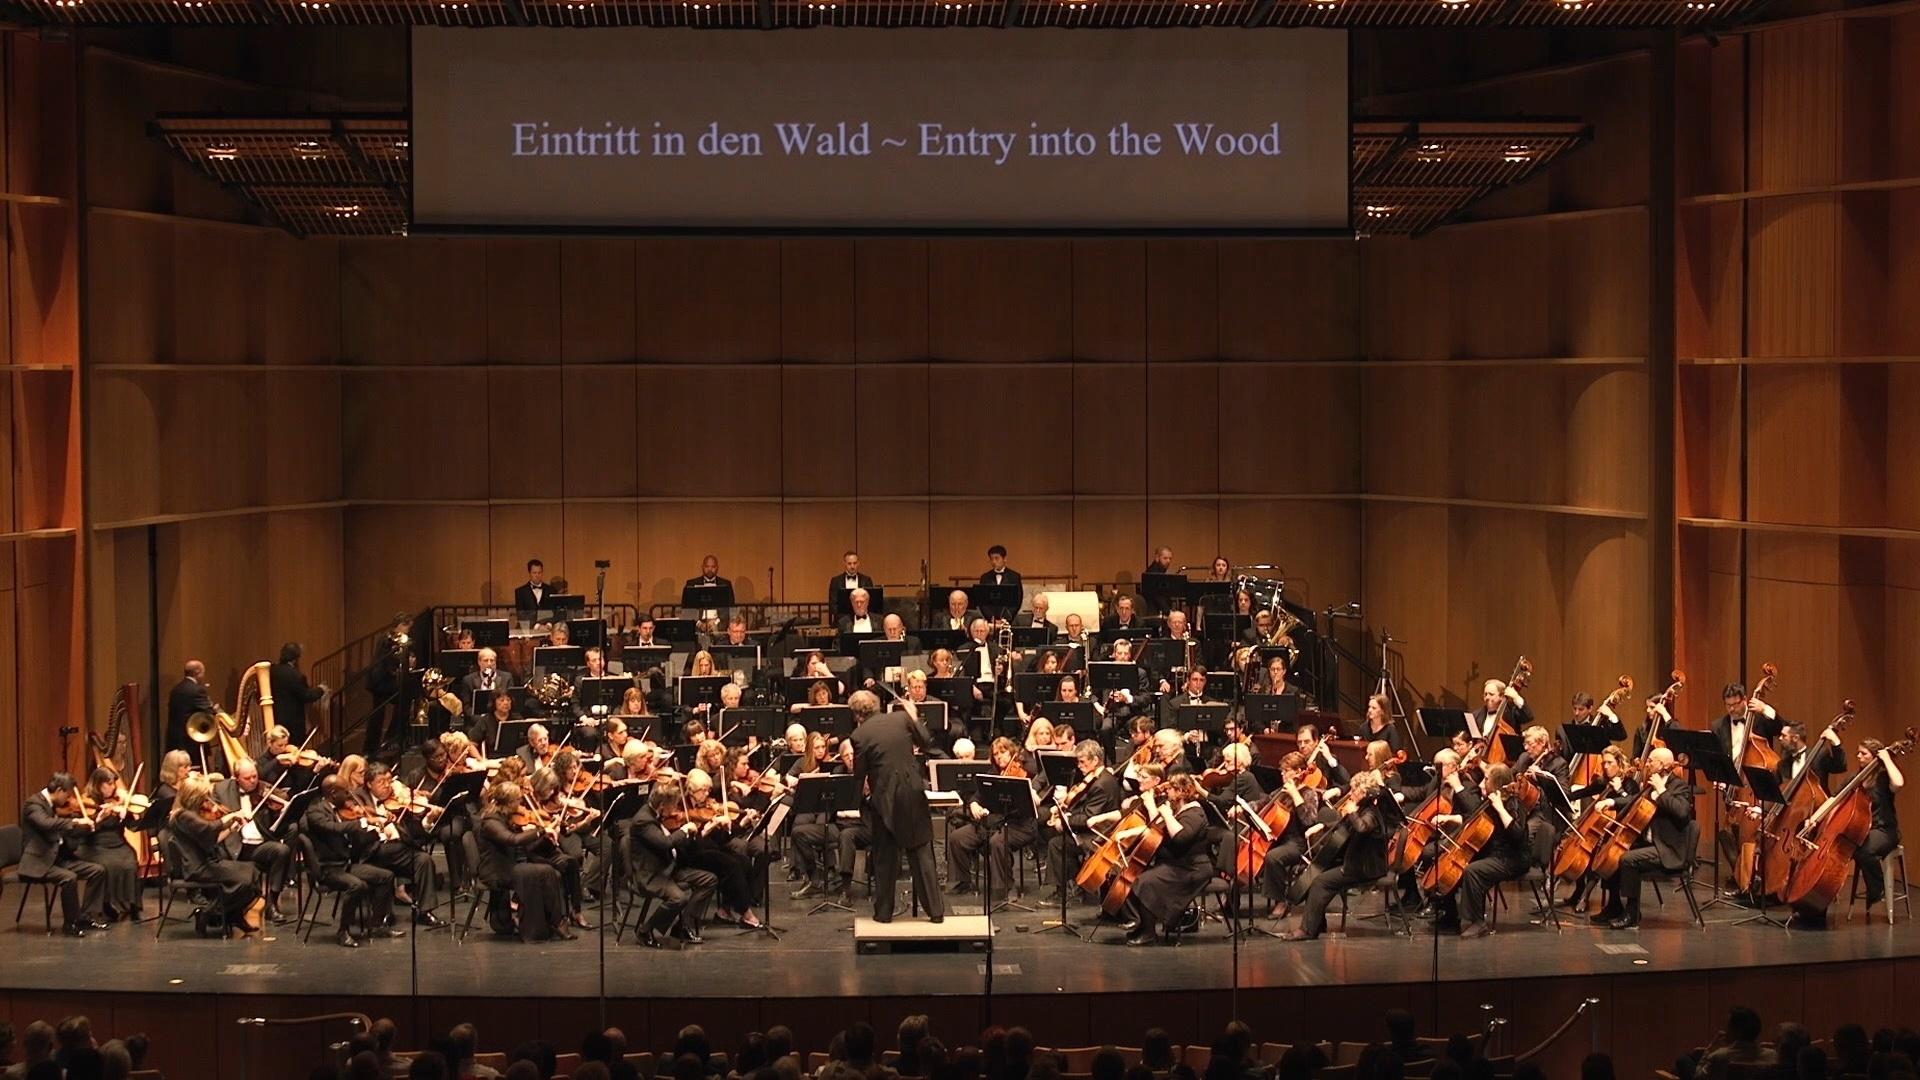 WFMT, Episode Seven - The California Symphony